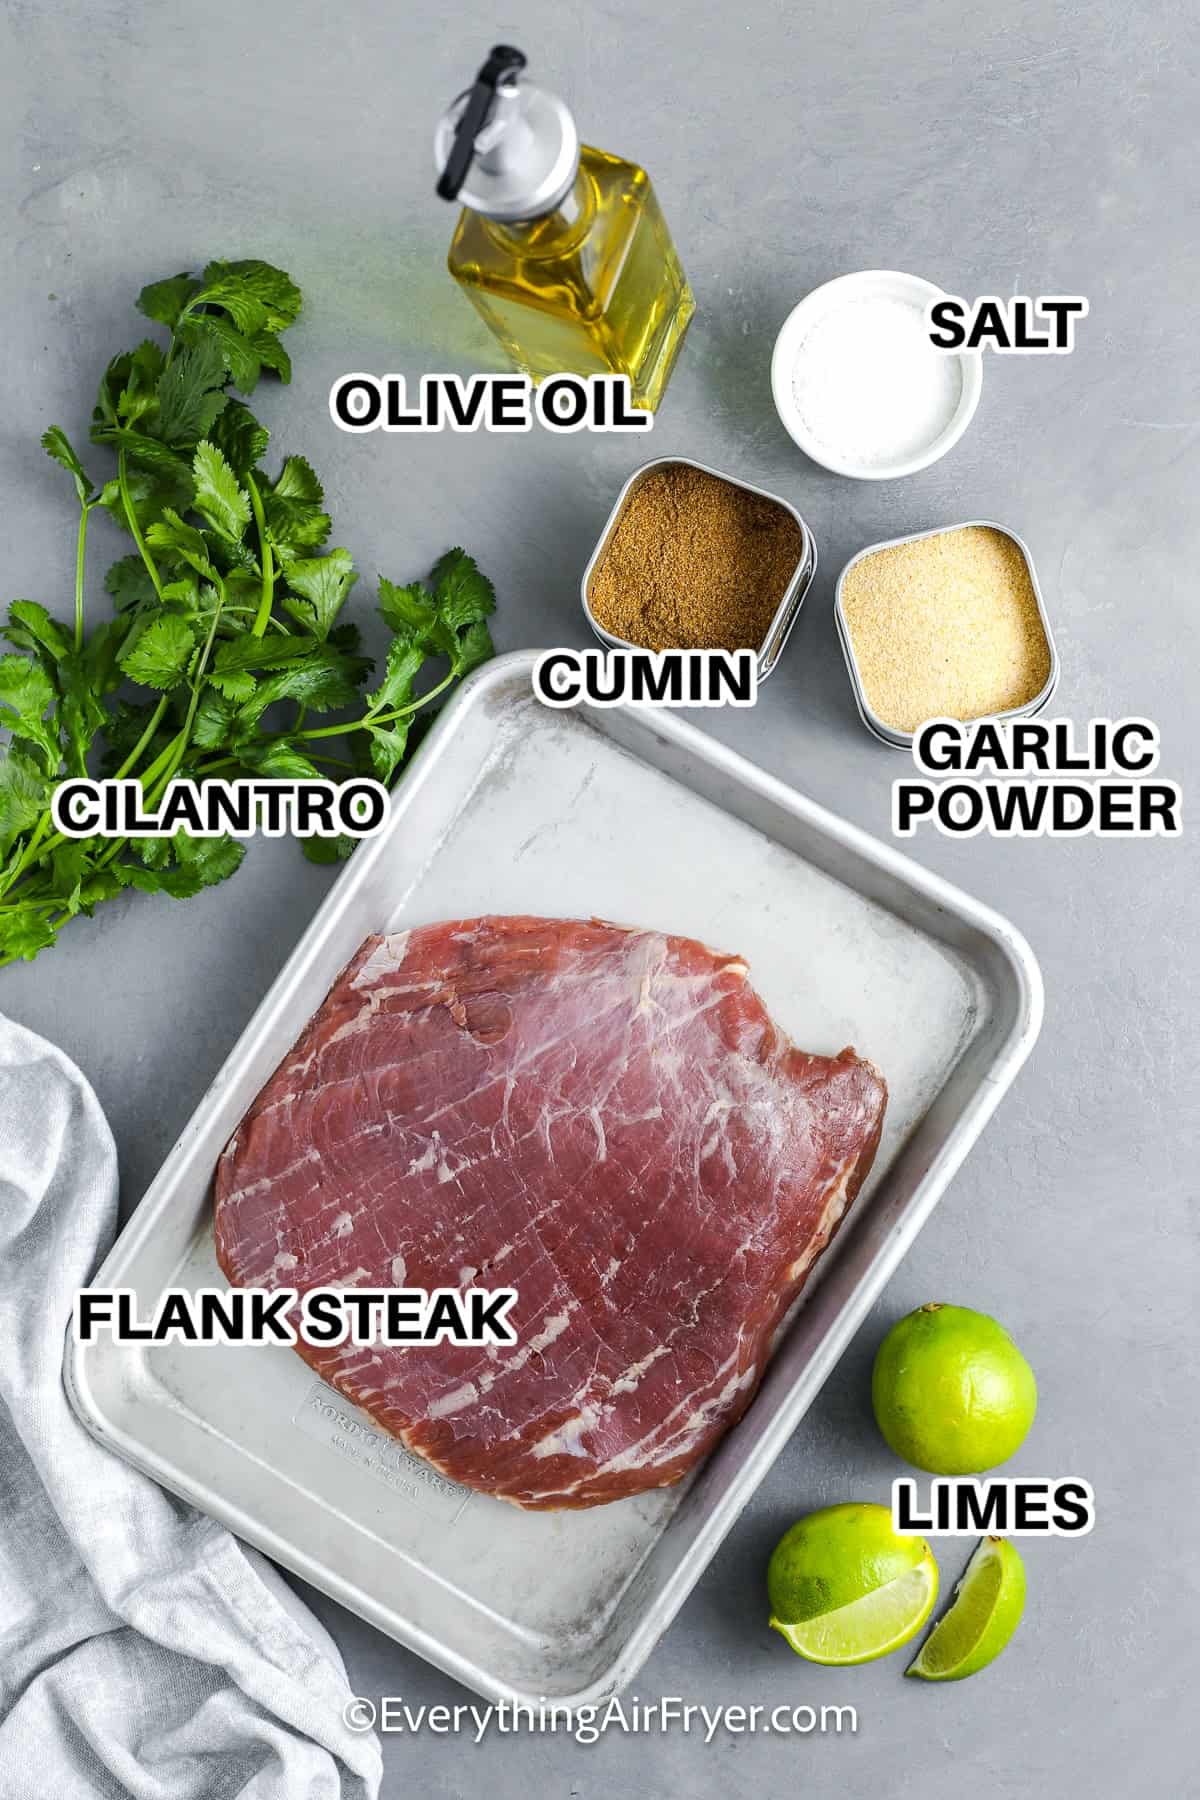 Ingredients to make Air Fryer Flank Steak labeled: olive oil, salt, cumin, garlic powder, cilantro, flank steak, and limes